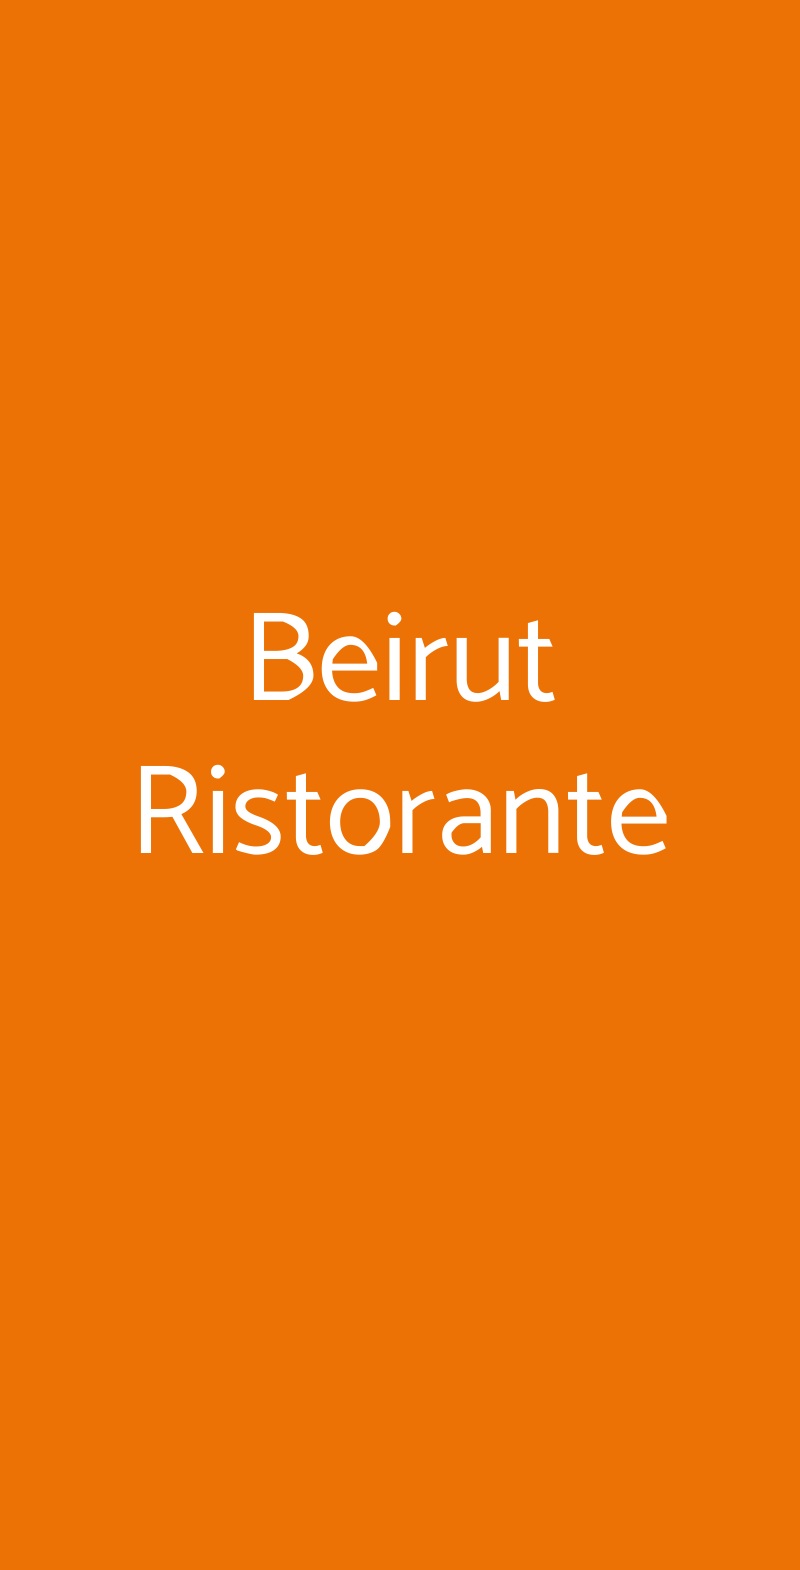 Beirut Ristorante Milano menù 1 pagina